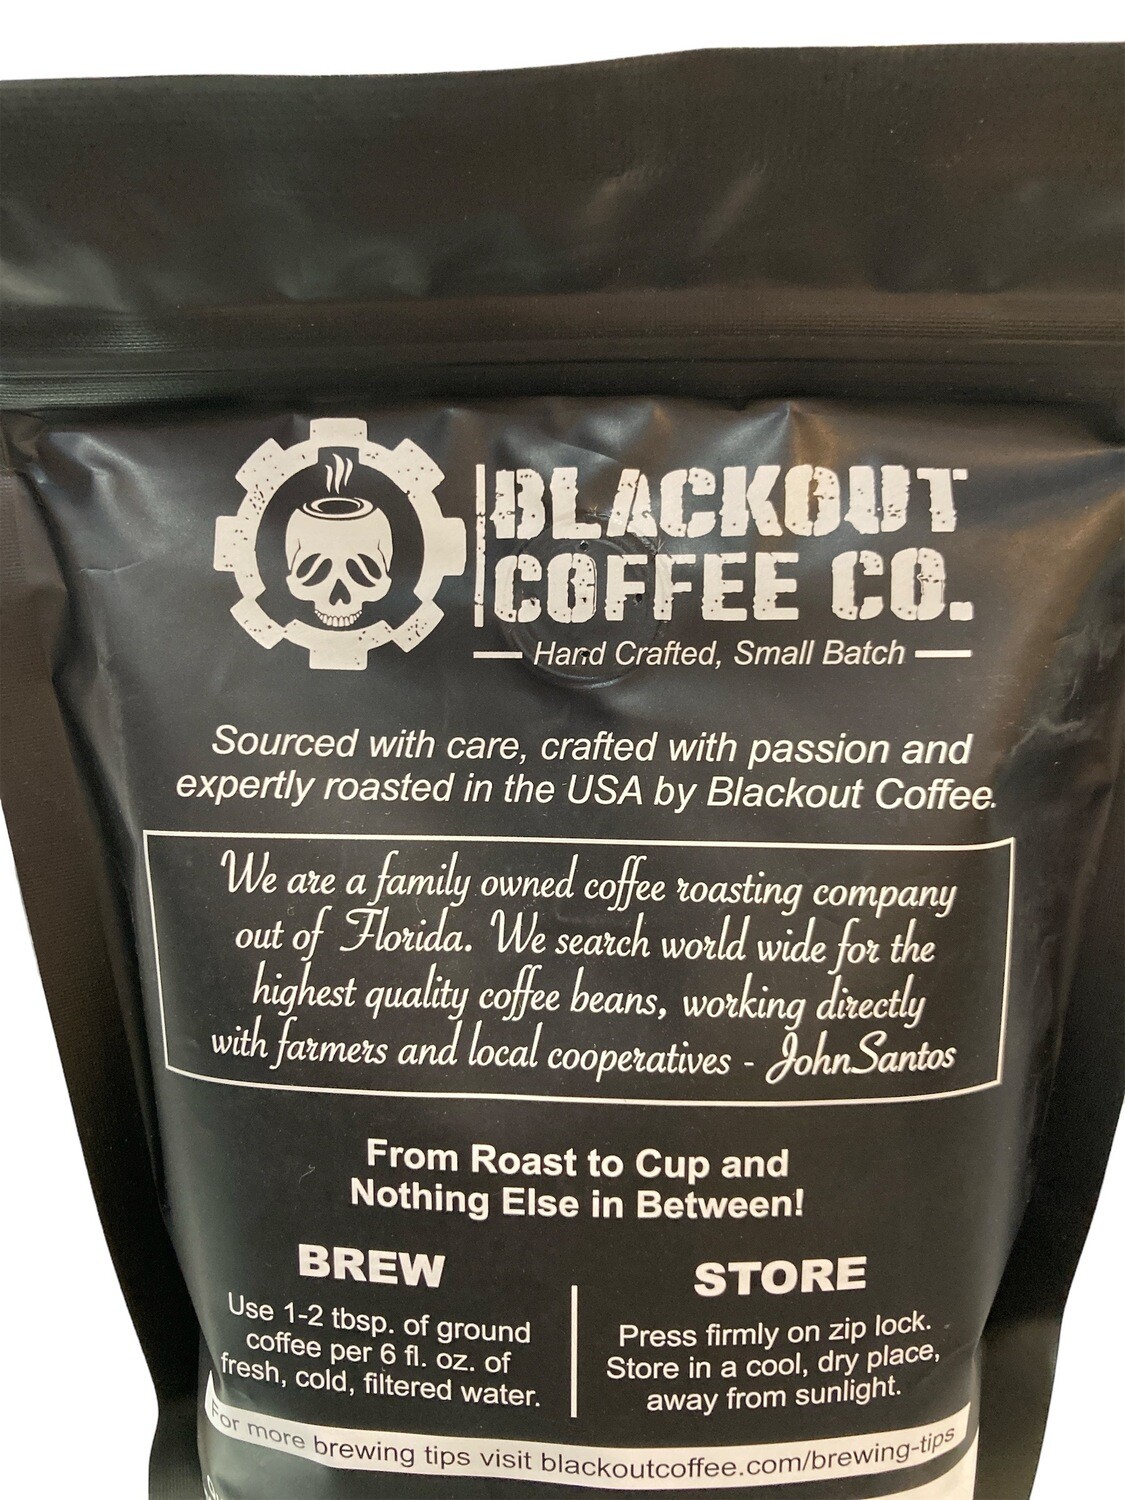 Blackout Coffee Co.